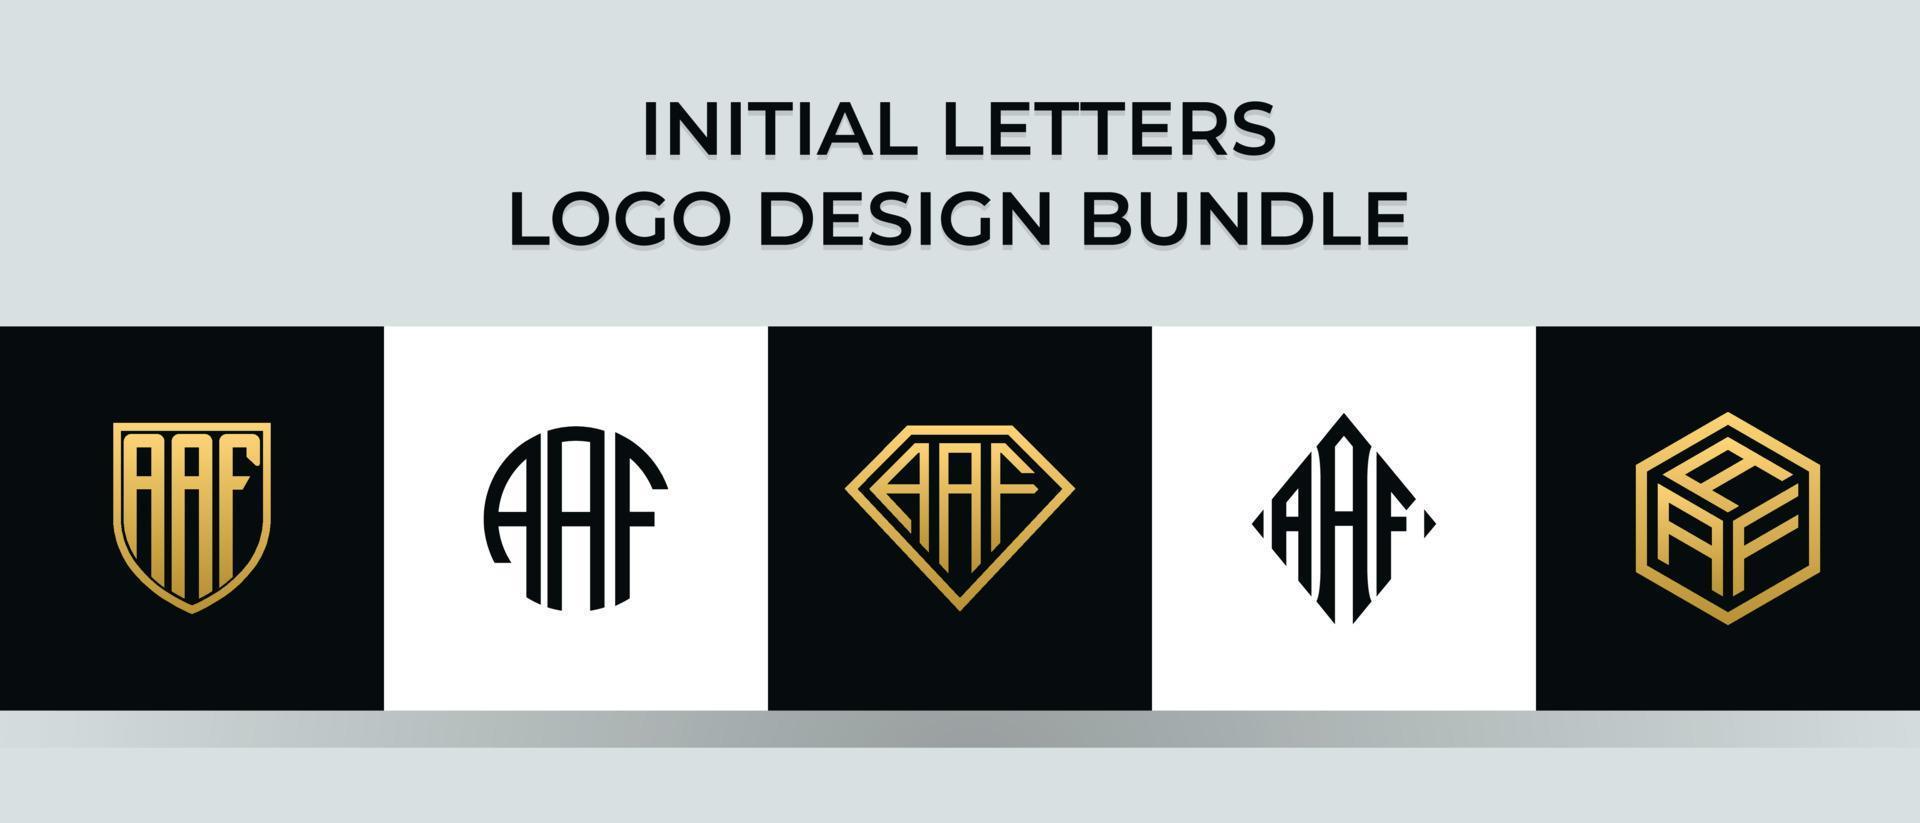 initiala bokstäver aaf logo designs bunt vektor